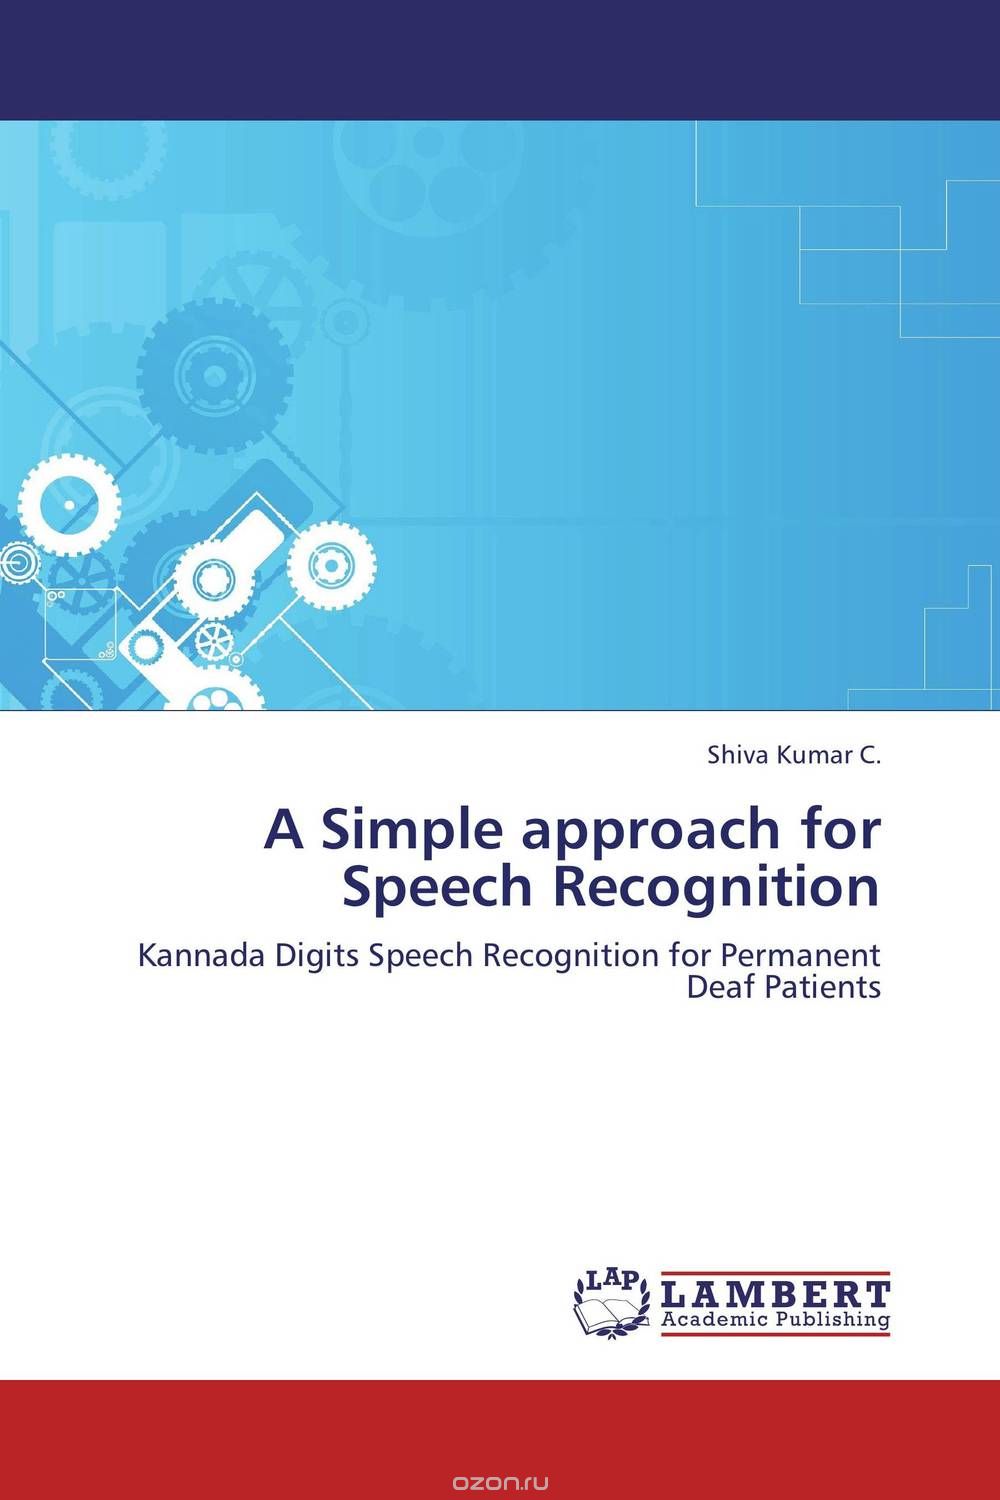 Скачать книгу "A Simple approach for Speech Recognition"